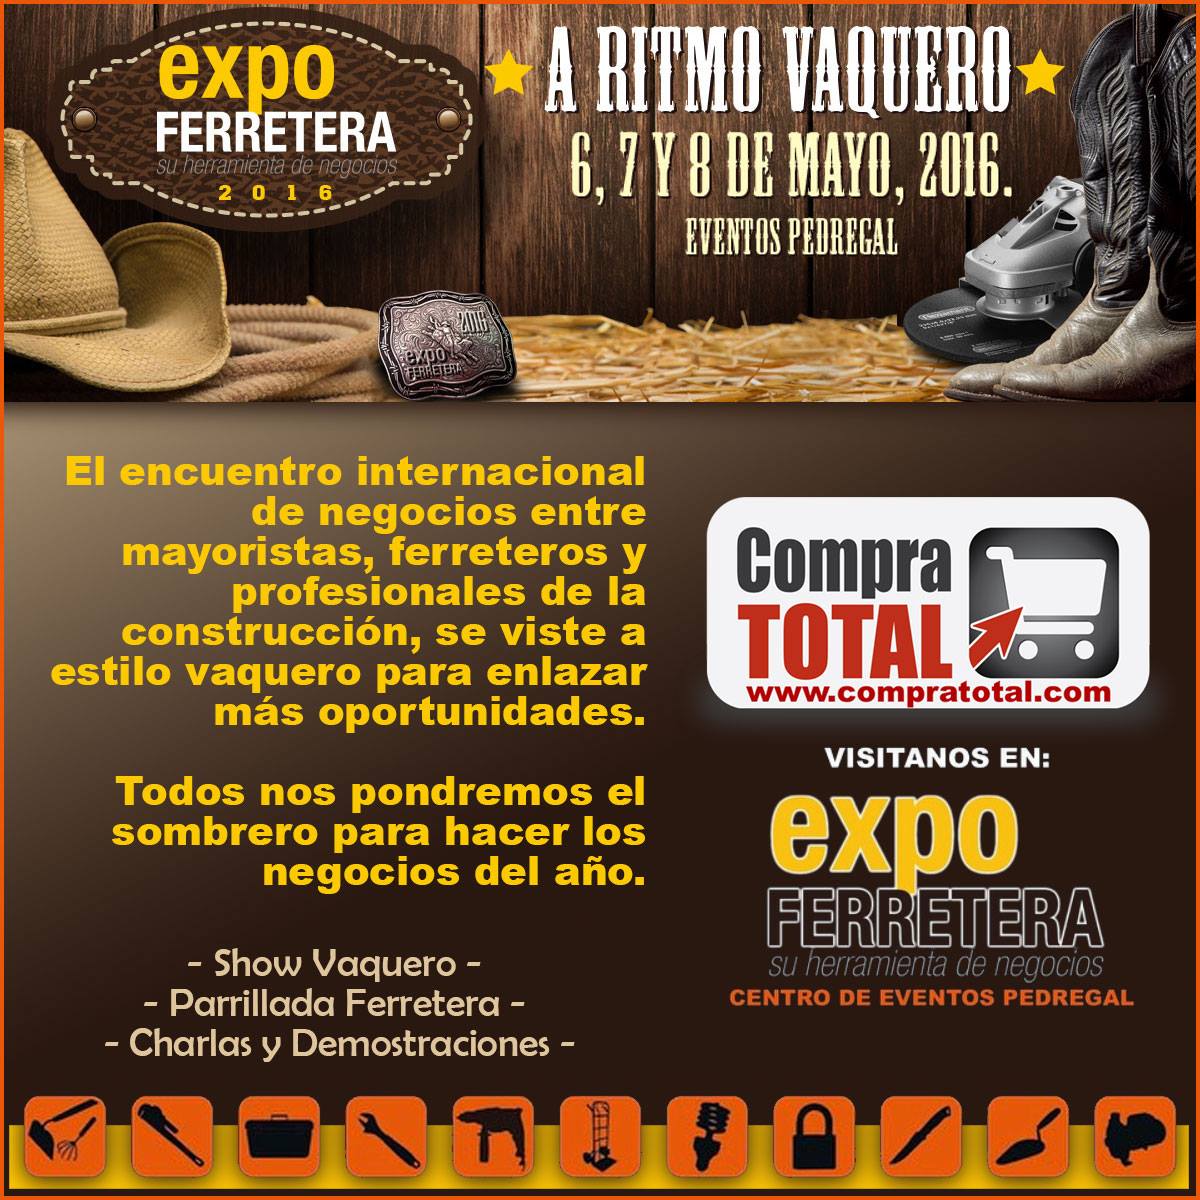 Expo Ferretera 2016